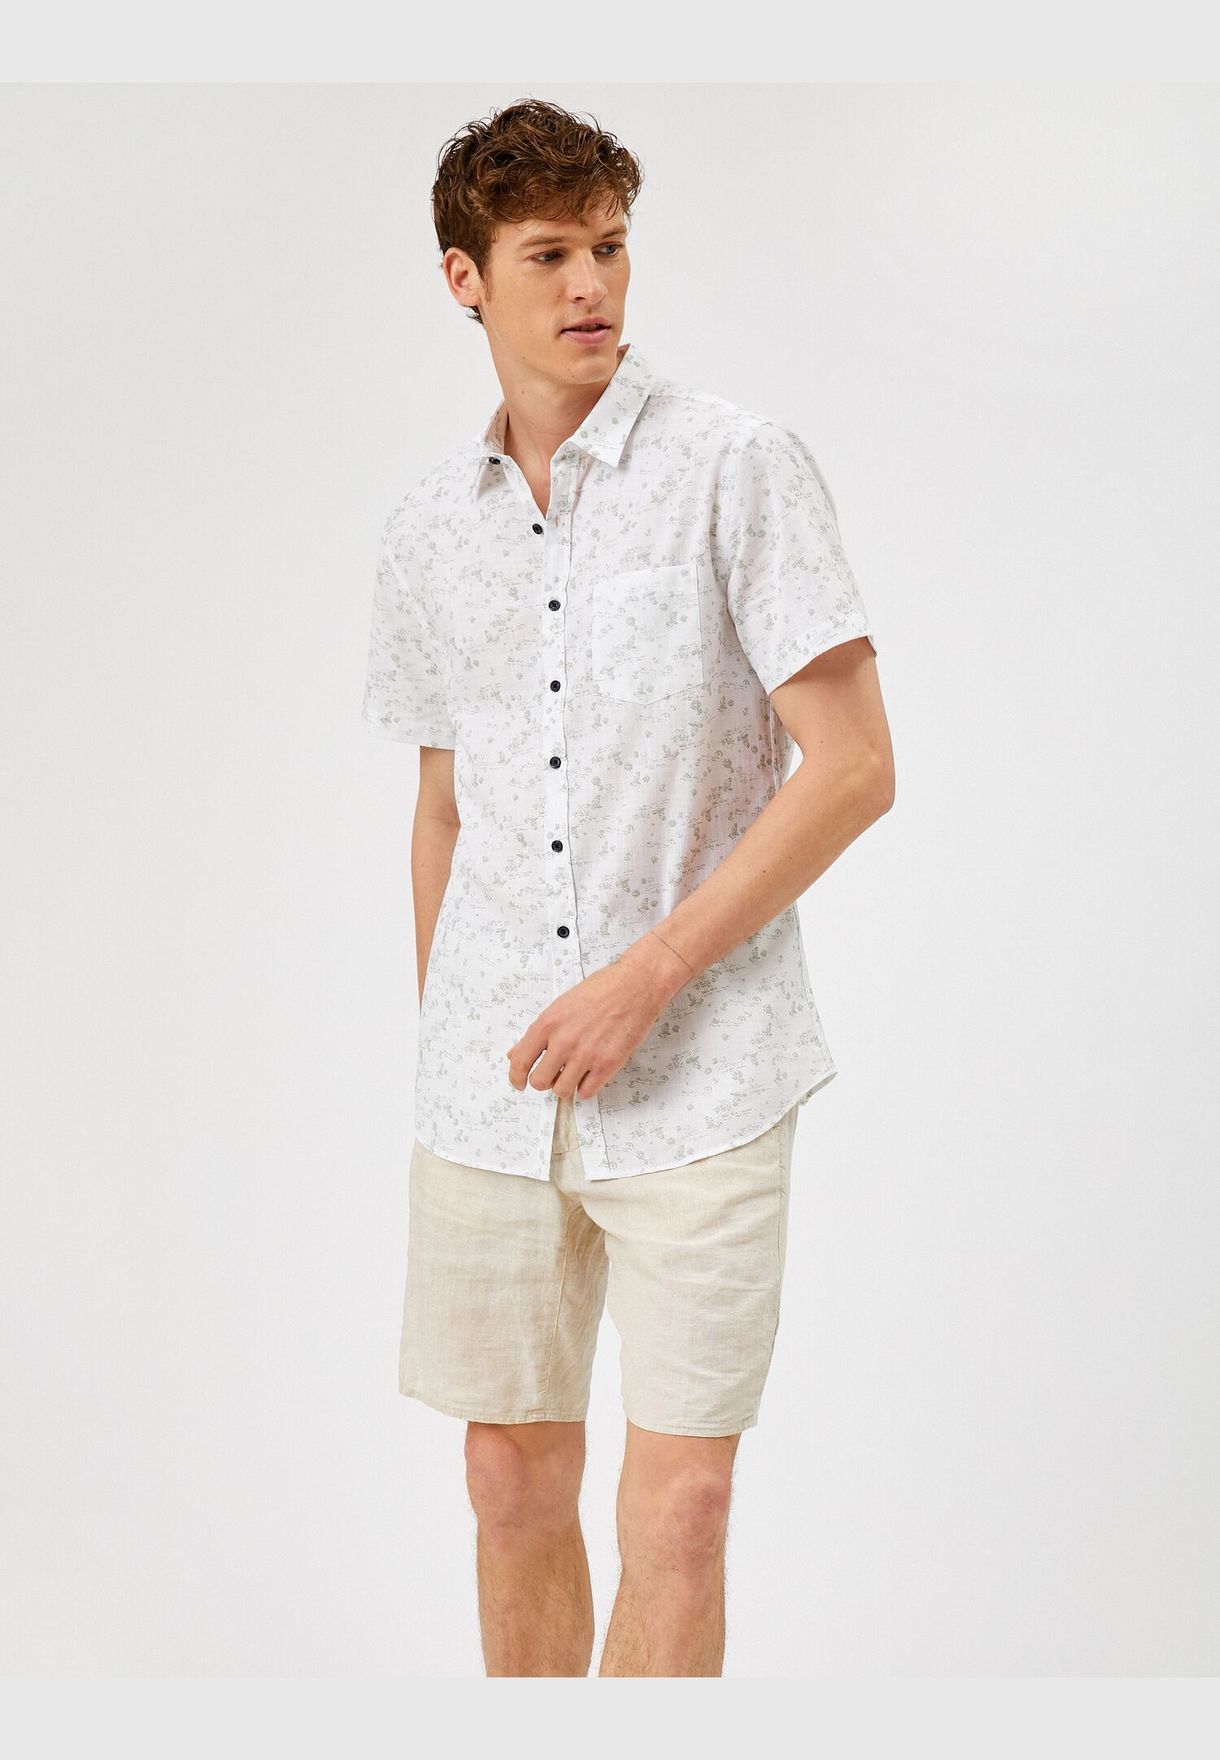 Patterned Shirt Slim Fit Short Sleeve Cotton